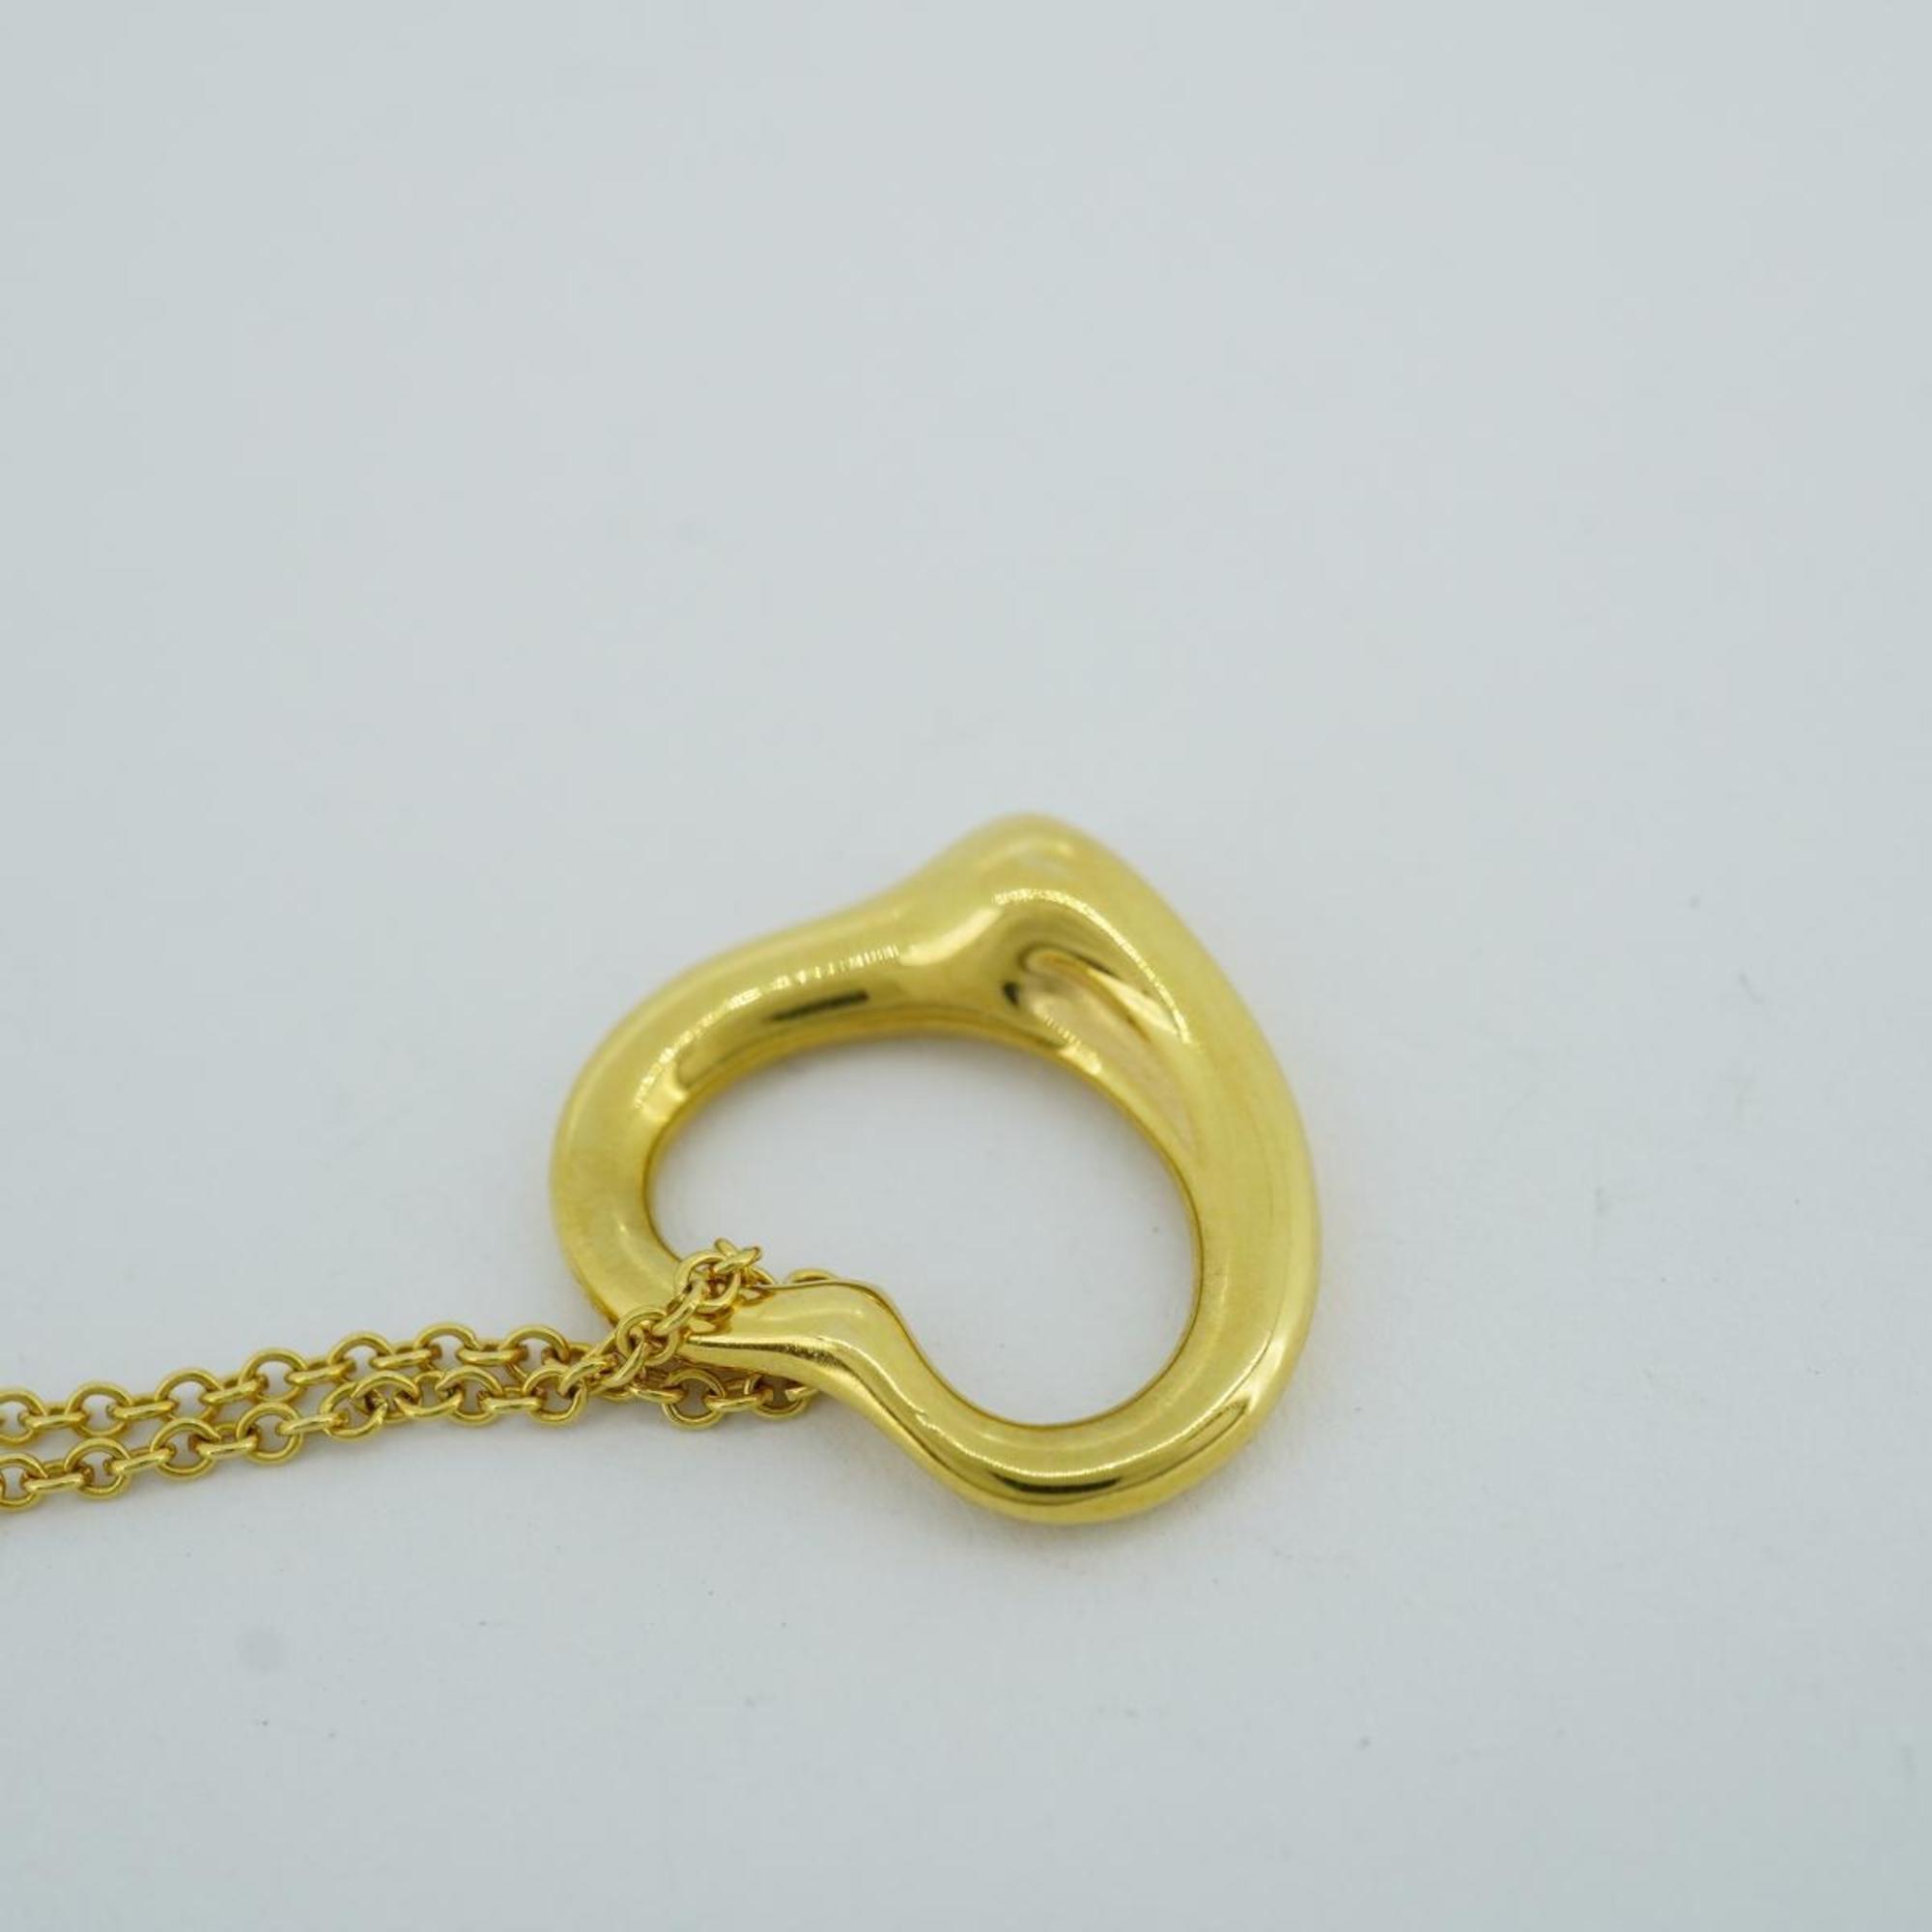 Tiffany Necklace Heart K18YG Yellow Gold Women's